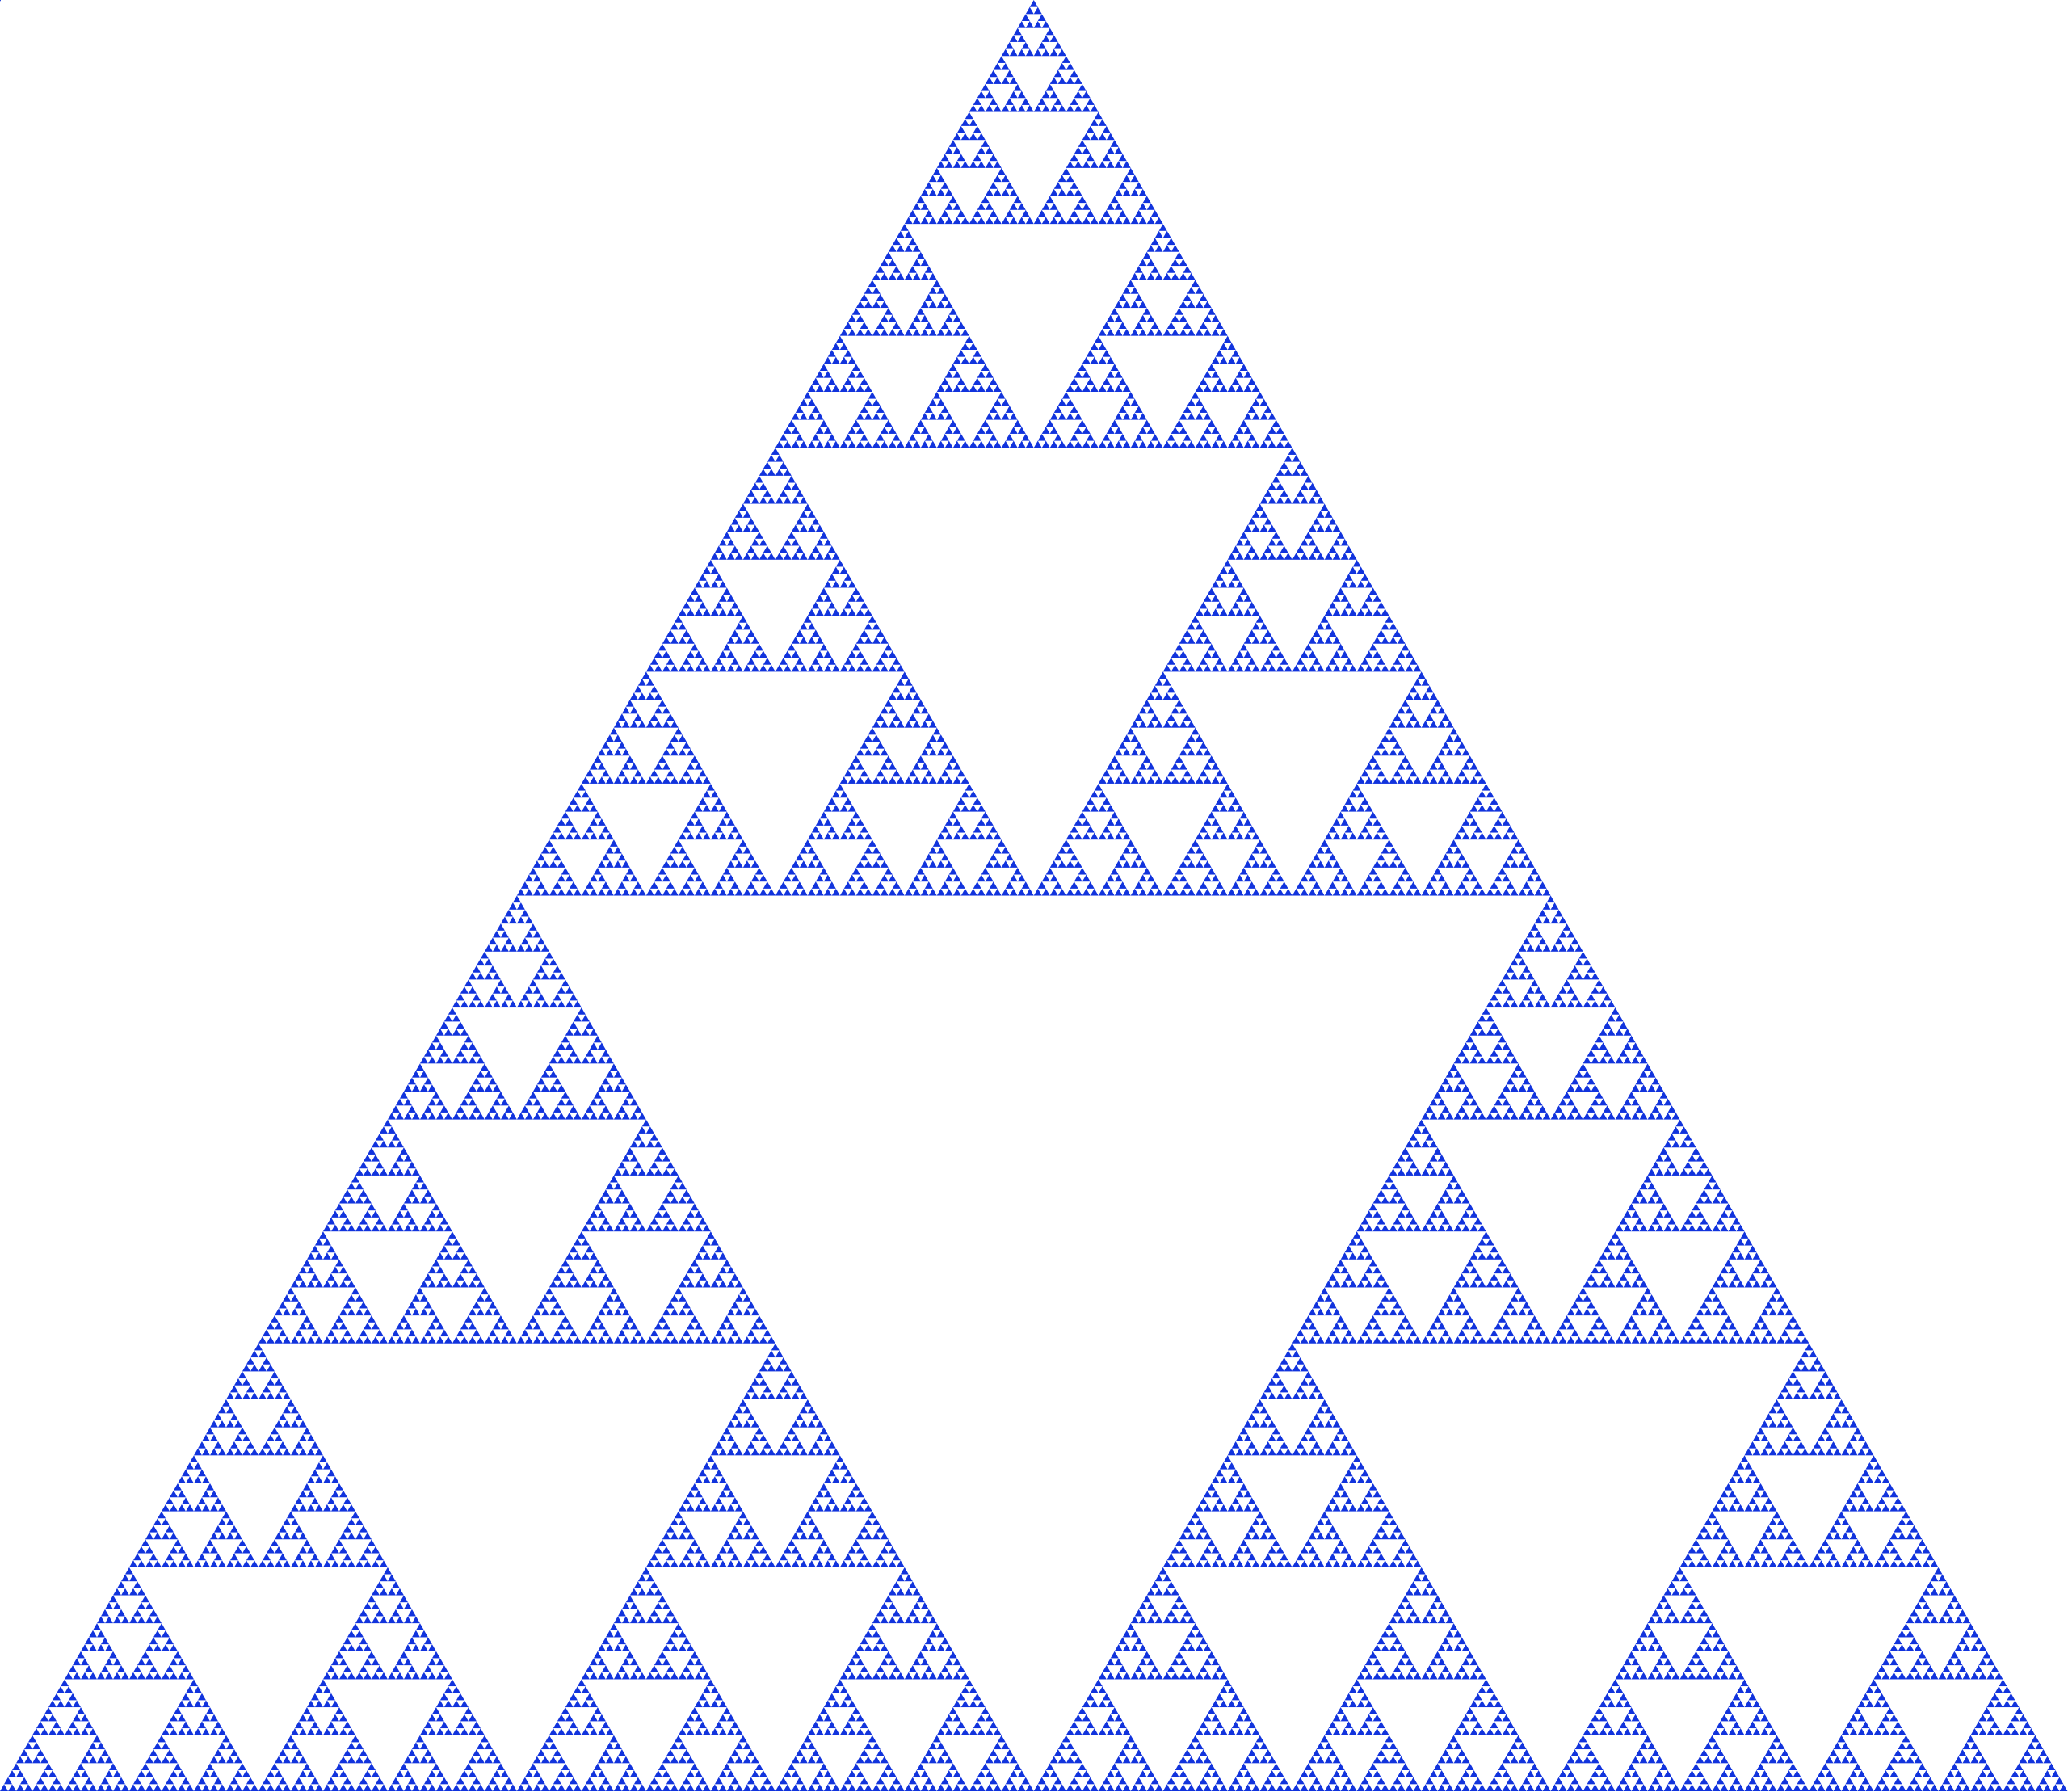 Sierpiński triangle in Java